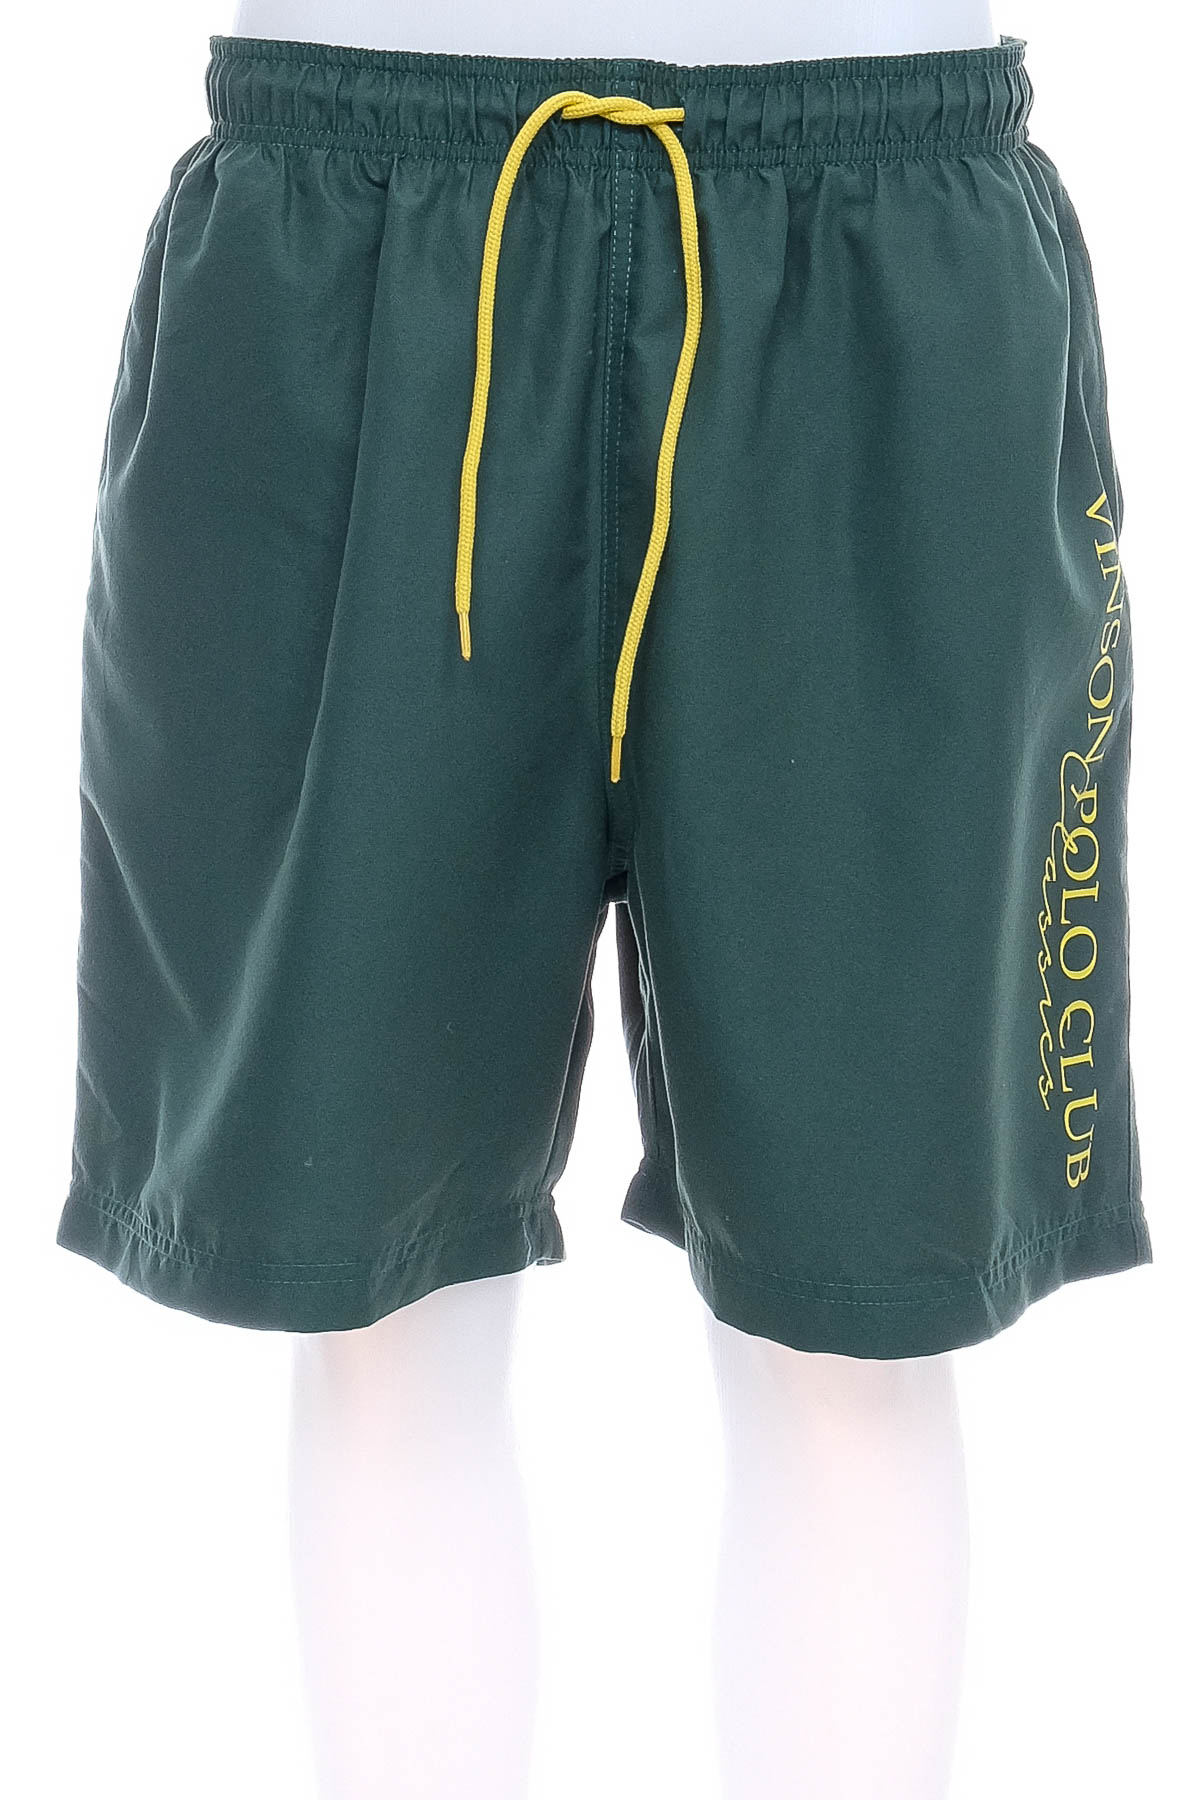 Men's shorts - VINSON POLO CLUB - 0